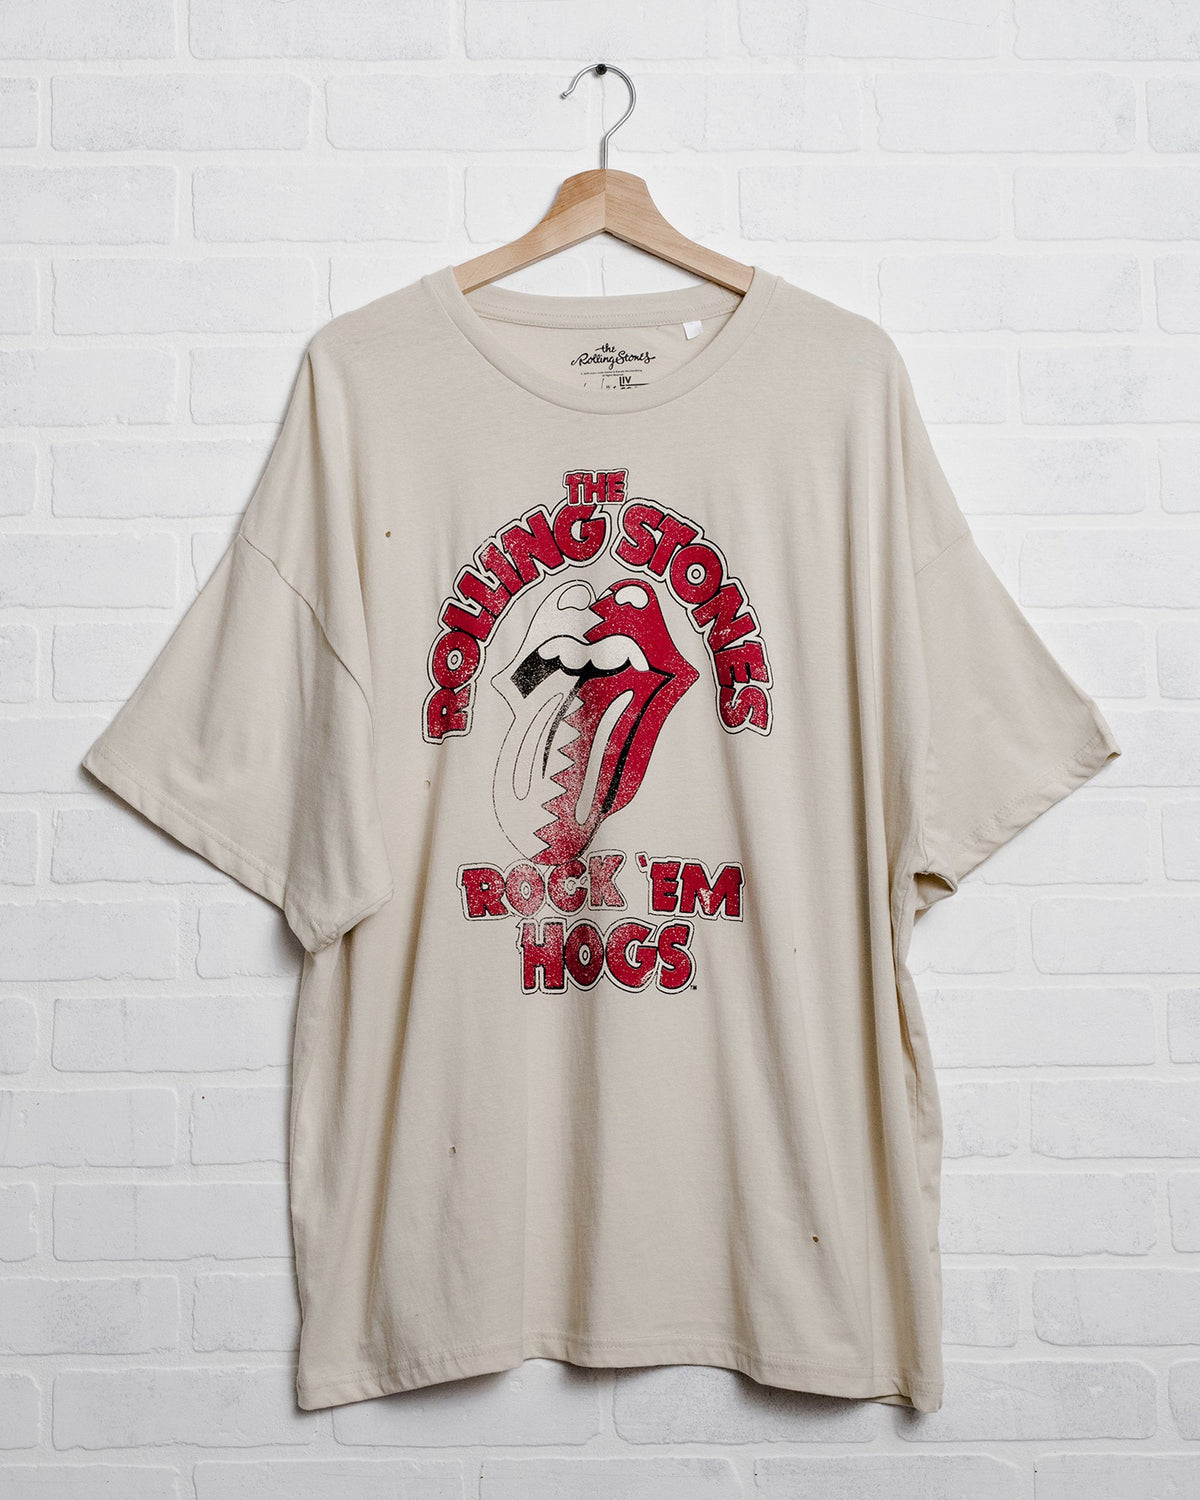 Rolling Stones Rock Em Hogs Off White Oversized Tee - shoplivylu